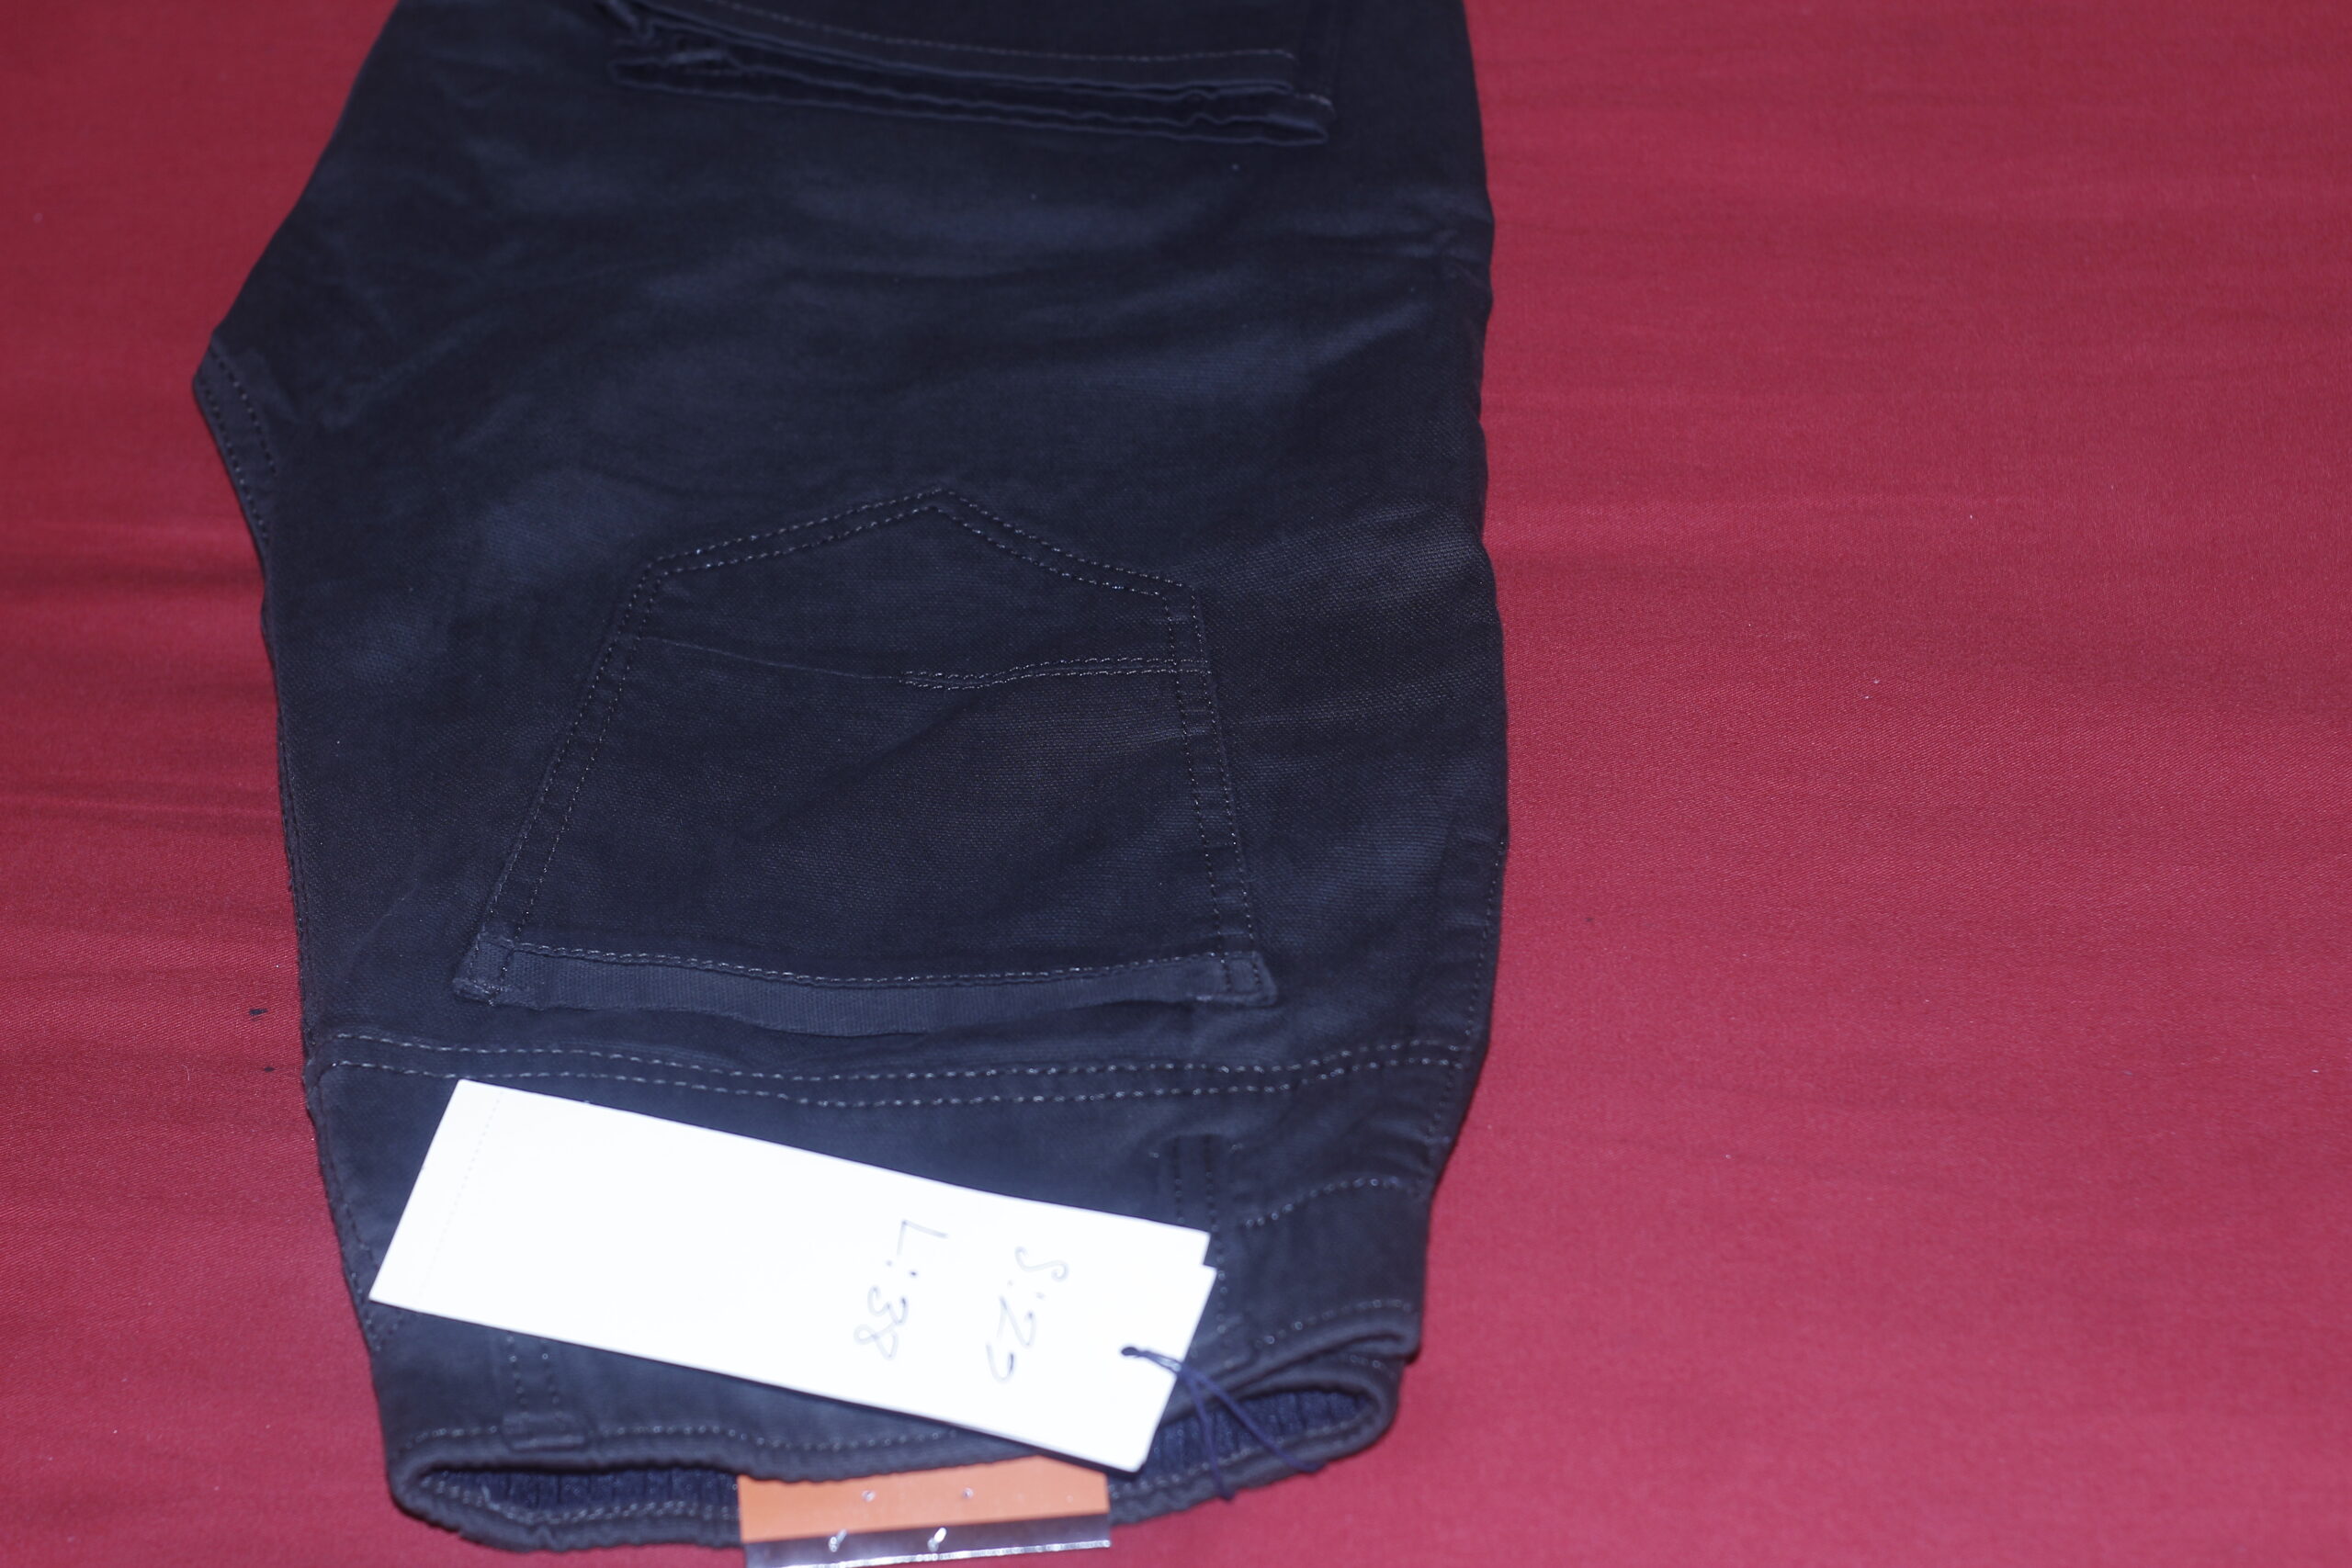 Jeans Pant For Man Size: 29 Black Color